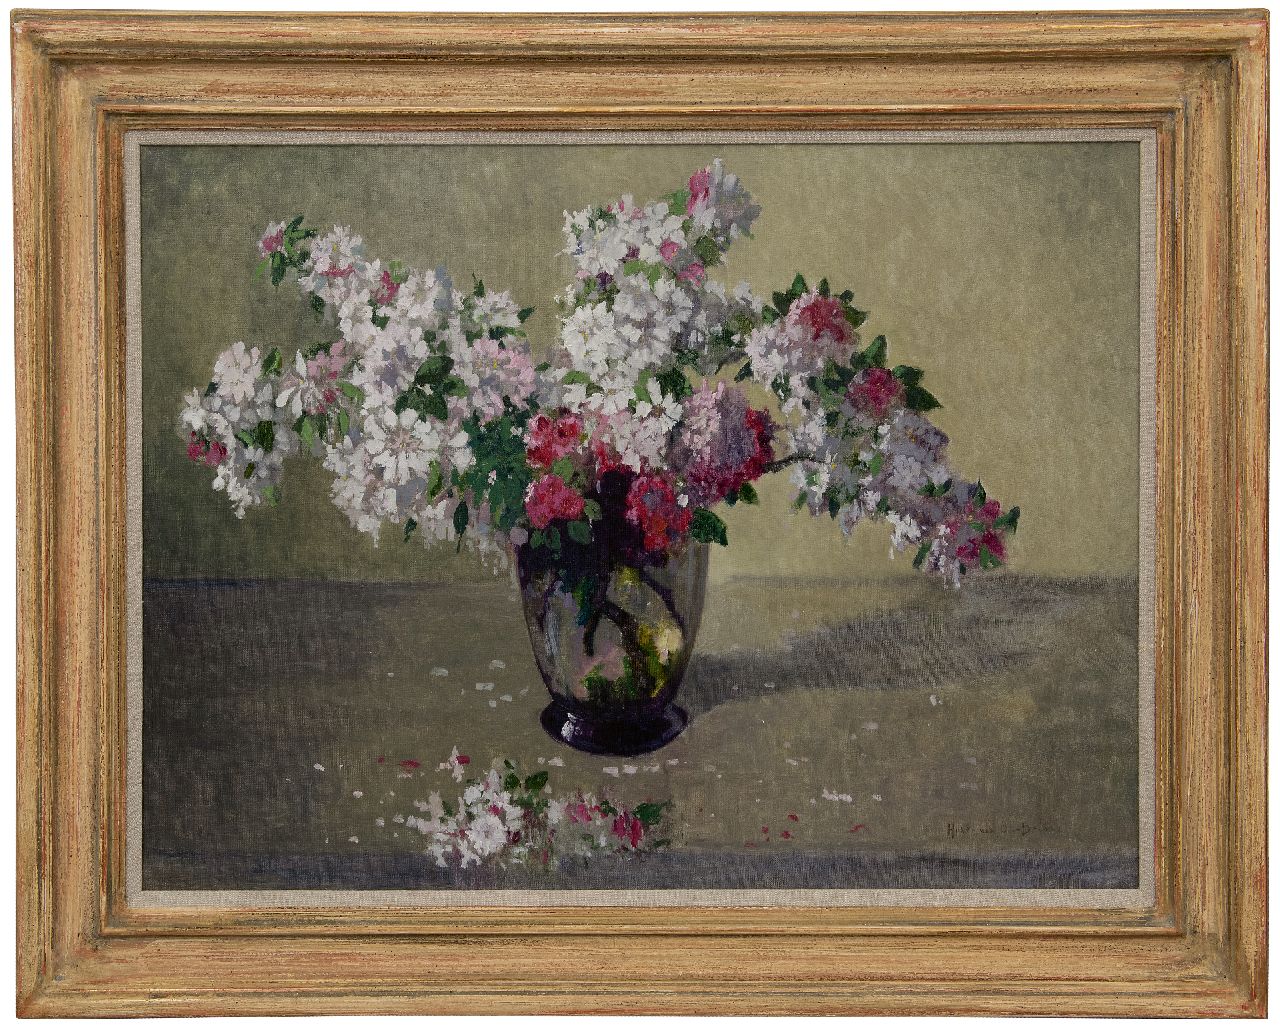 Os-Delhez (Hendrik van Os) H. van | Hendrik 'Henri' van Os-Delhez (Hendrik van Os) | Paintings offered for sale | Apple blossom, oil on canvas 59.9 x 79.8 cm, signed l.r.